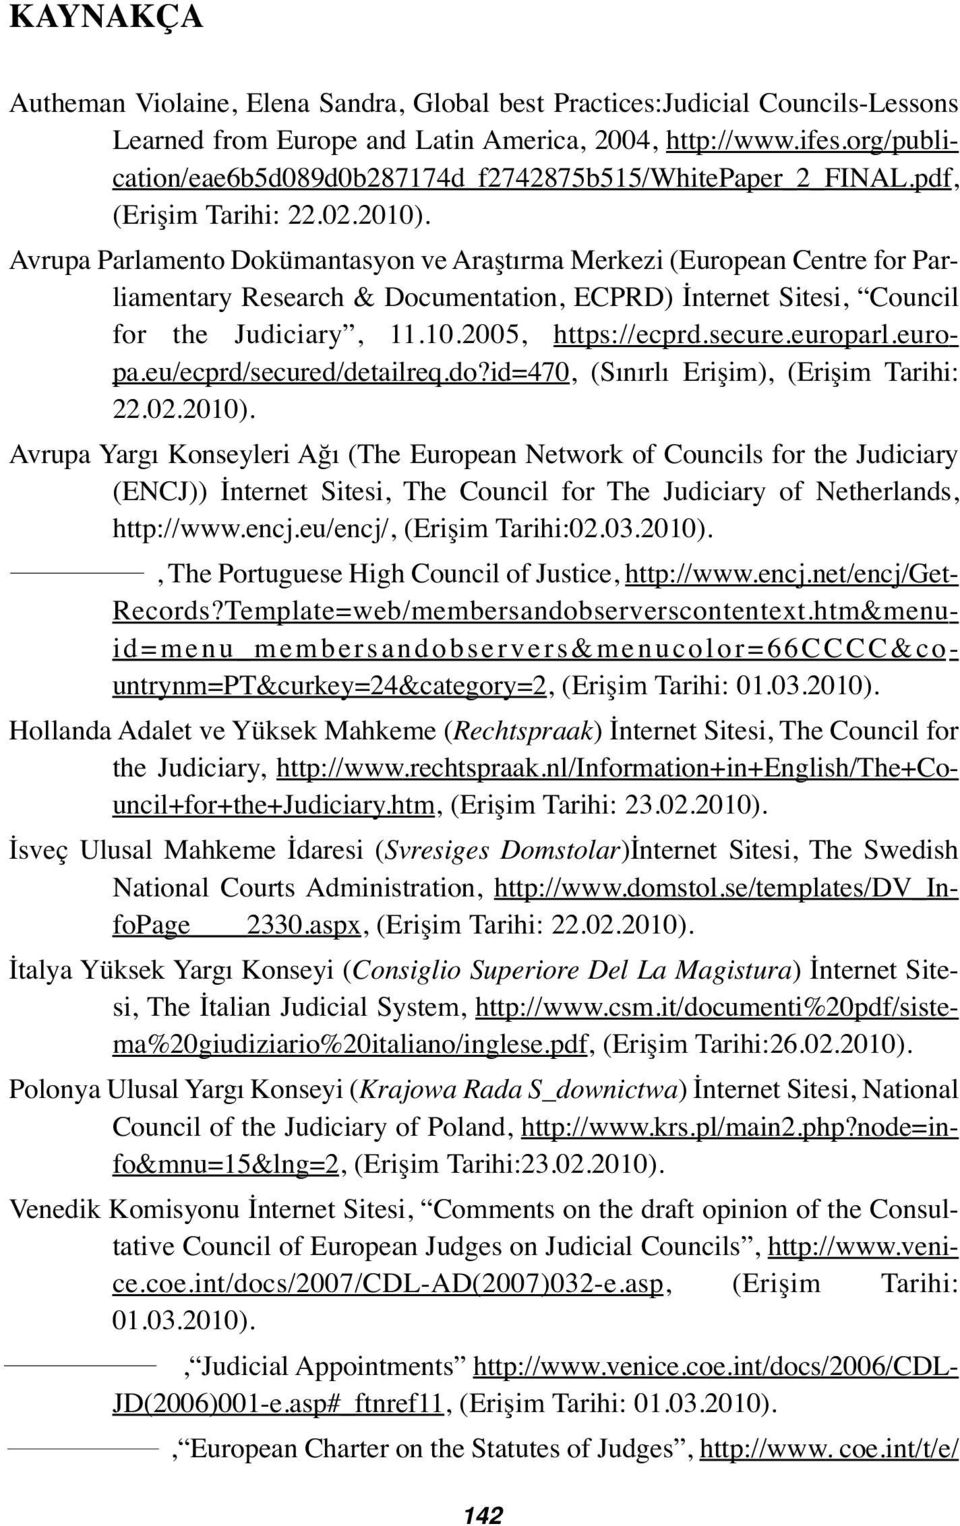 Avrupa Parlamento Dokümantasyon ve Araştırma Merkezi (European Centre for Parliamentary Research & Documentation, ECPRD) İnternet Sitesi, Council for the Judiciary, 11.10.2005, https://ecprd.secure.